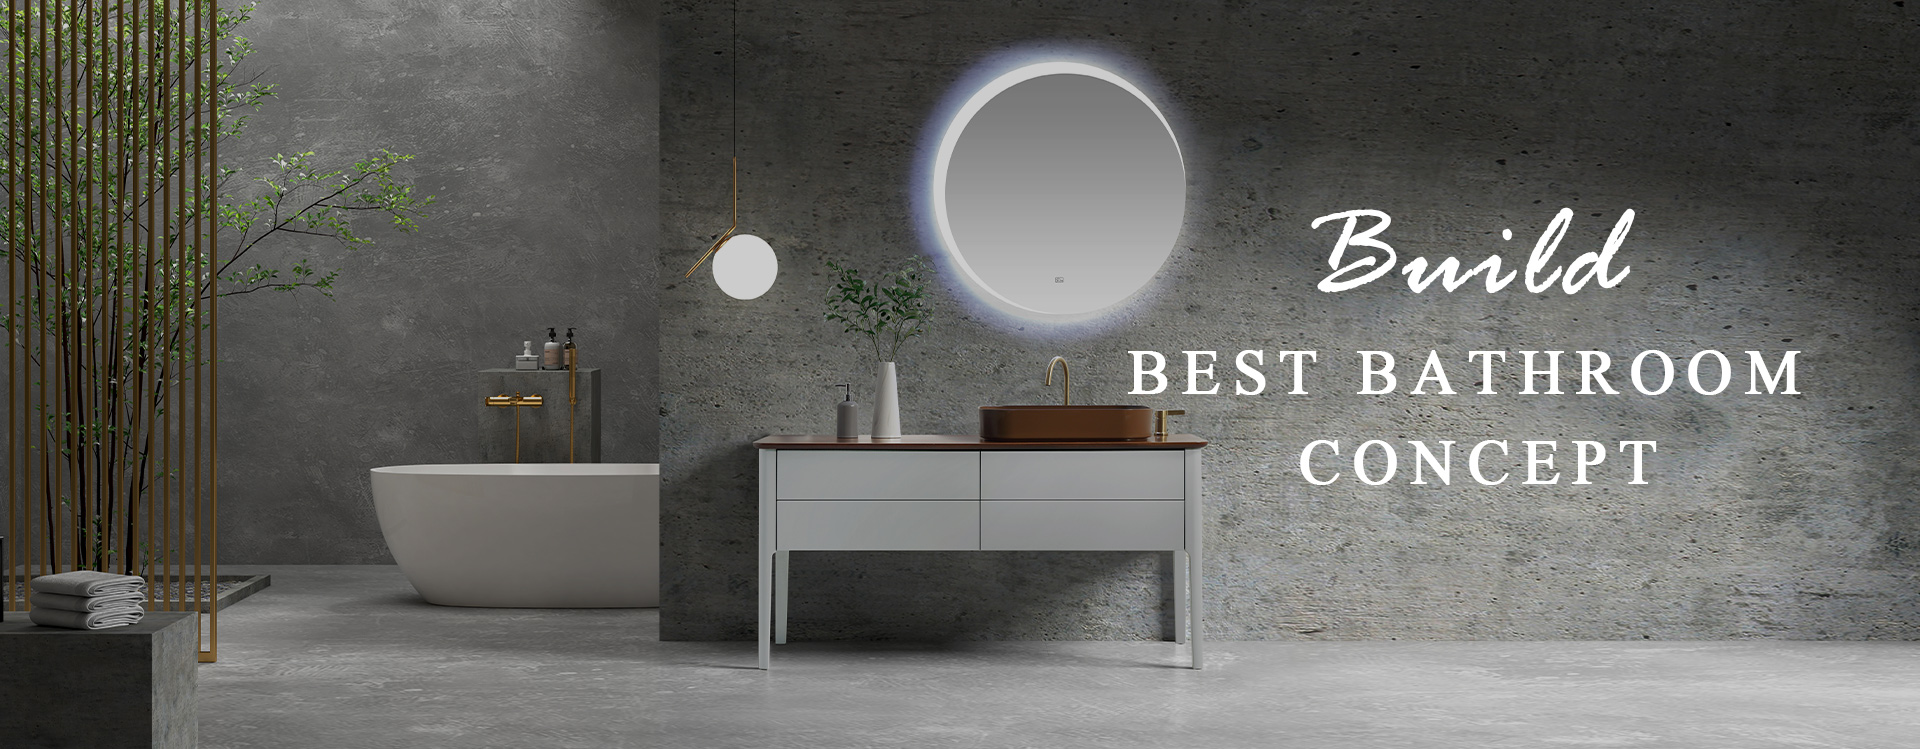 Build Best Bathroom Concept Ltd.